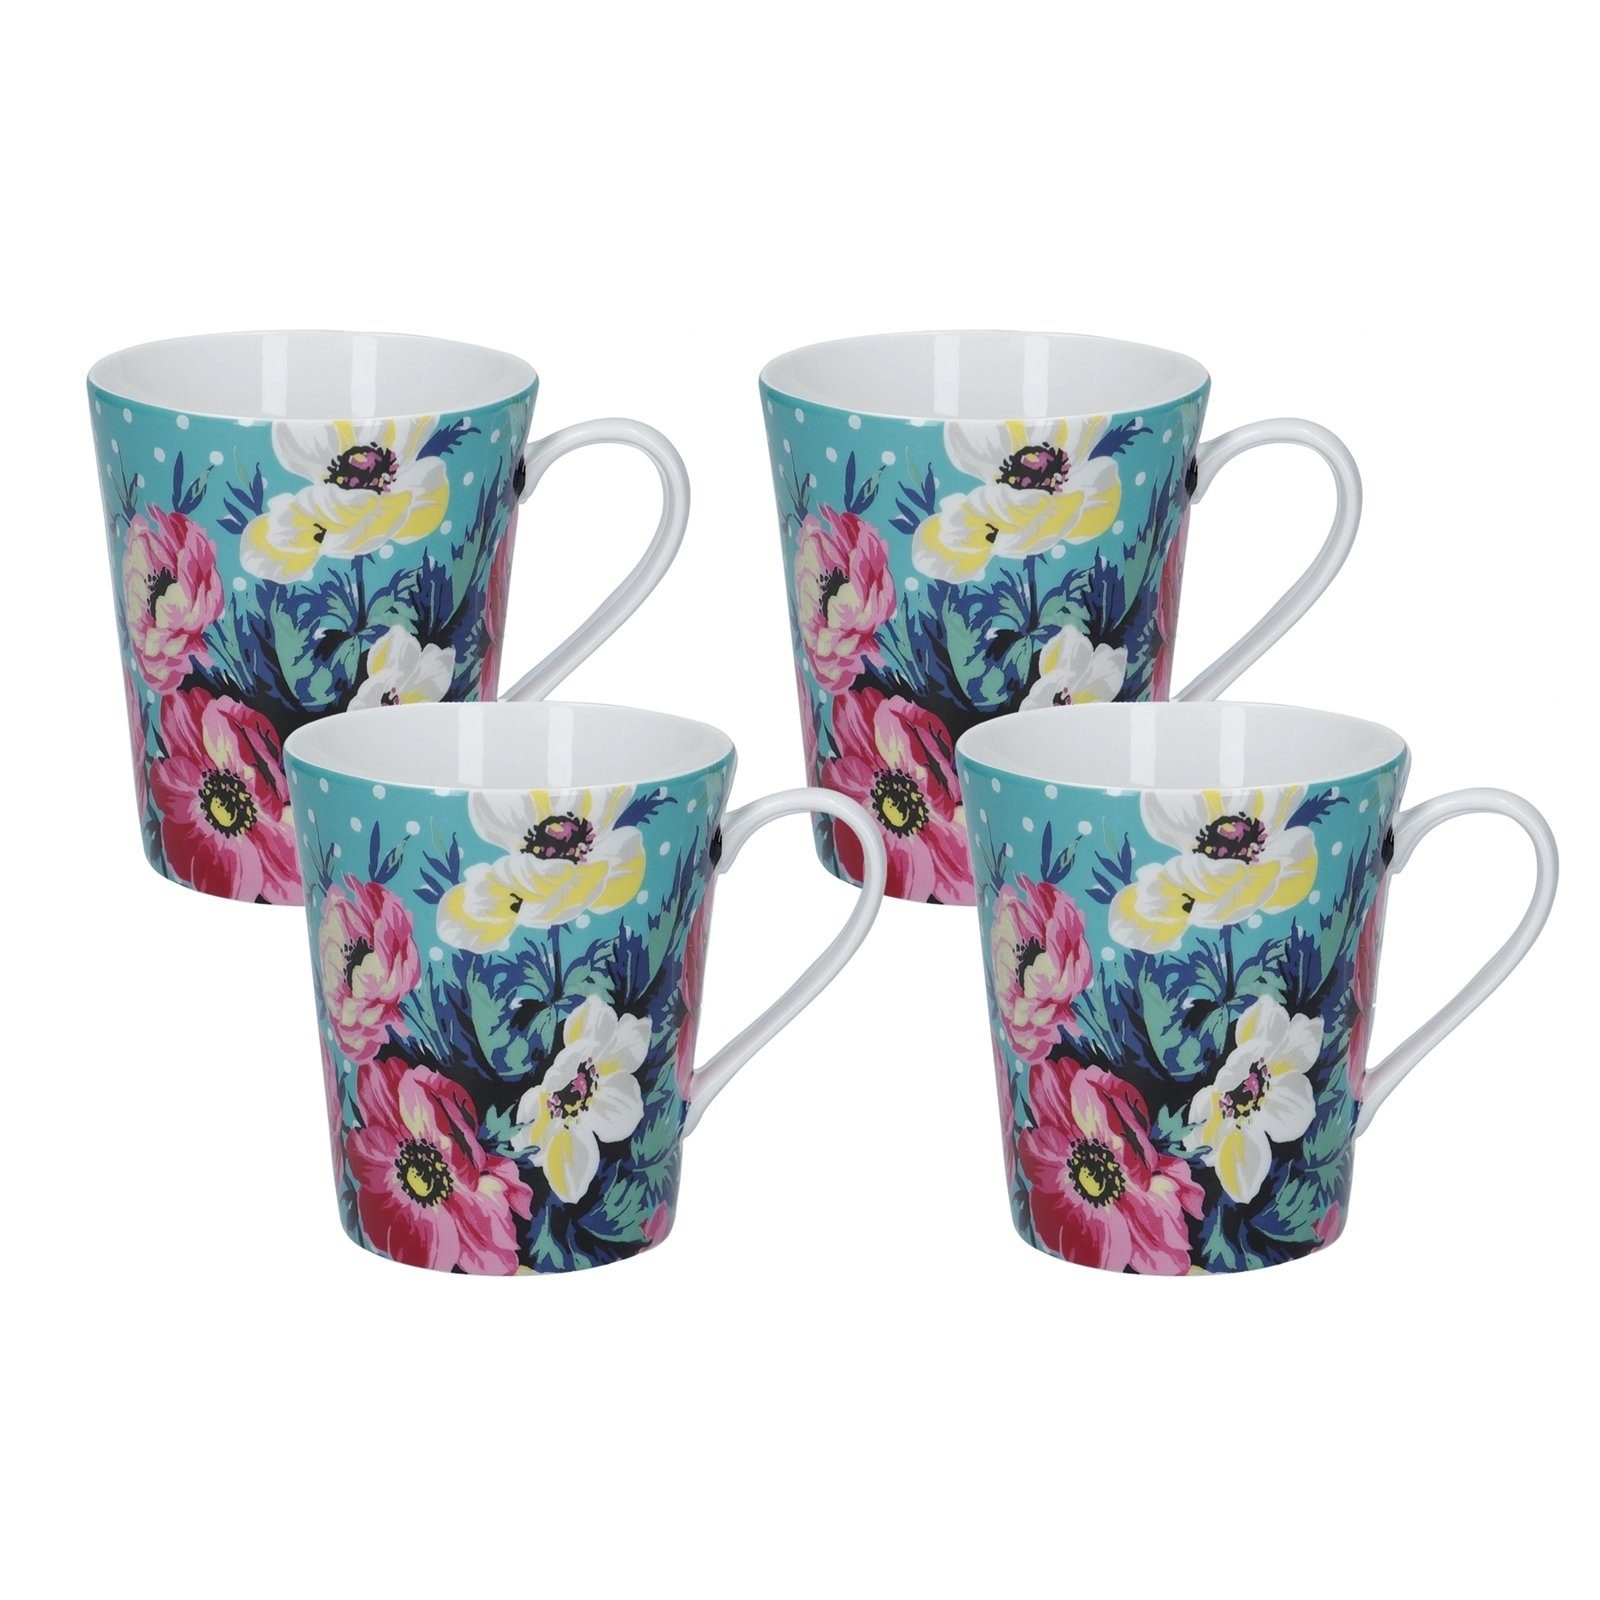 Neuetischkultur Tasse Kaffeetasse Porzellan Blumendekor 4er-Set Mikasa, Porzellan, Kaffeebecher Blume Bunt Grün